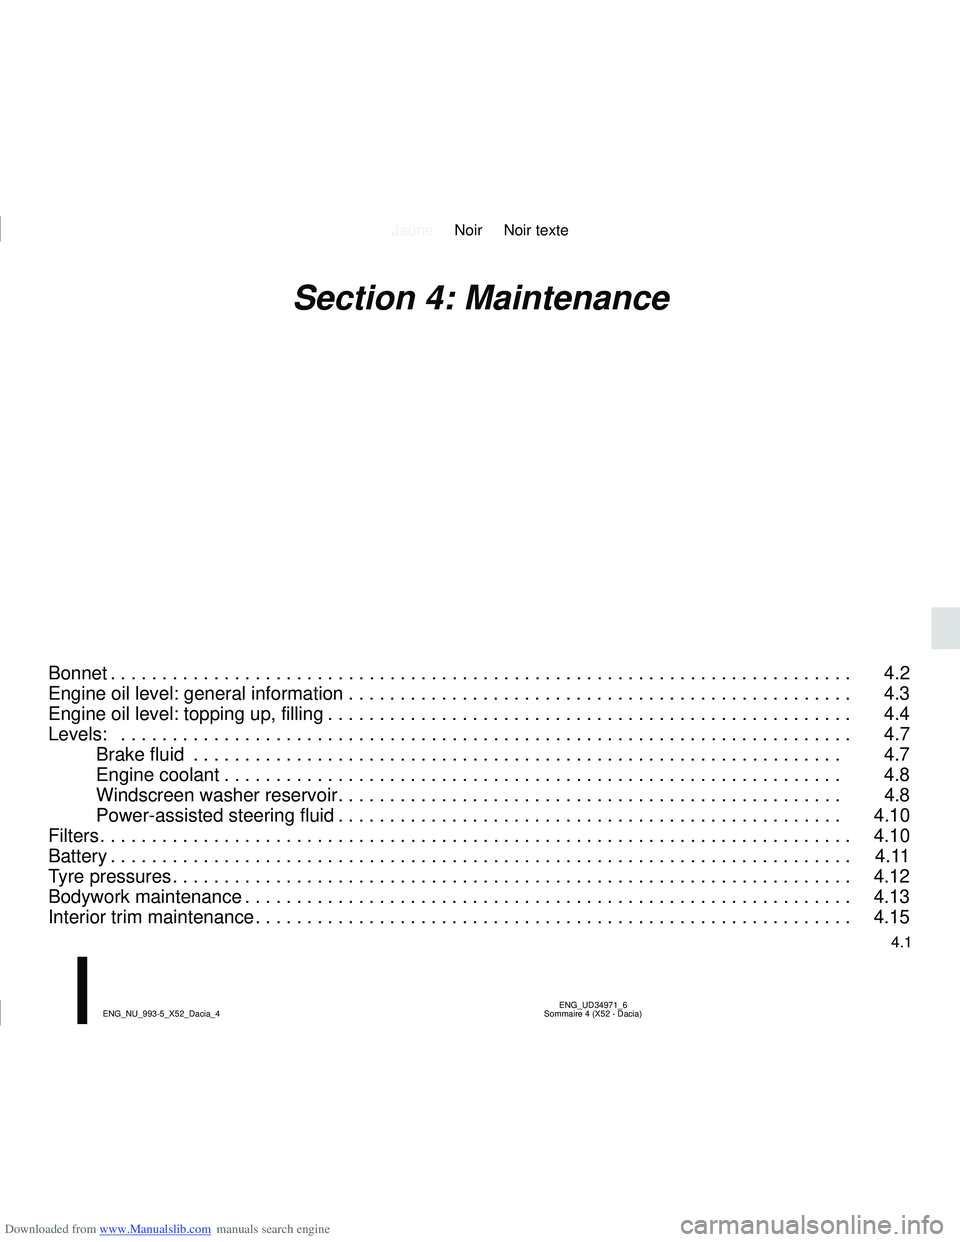 DACIA LOGAN 2017  Owners Manual Downloaded from www.Manualslib.com manuals search engine JauneNoir Noir texte
4.1
ENG_UD34971_6
Sommaire 4 (X52 - Dacia)
ENG_NU_993-5_X52_Dacia_4
Section 4: Maintenance
Bonnet . . . . . . . . . . . . 